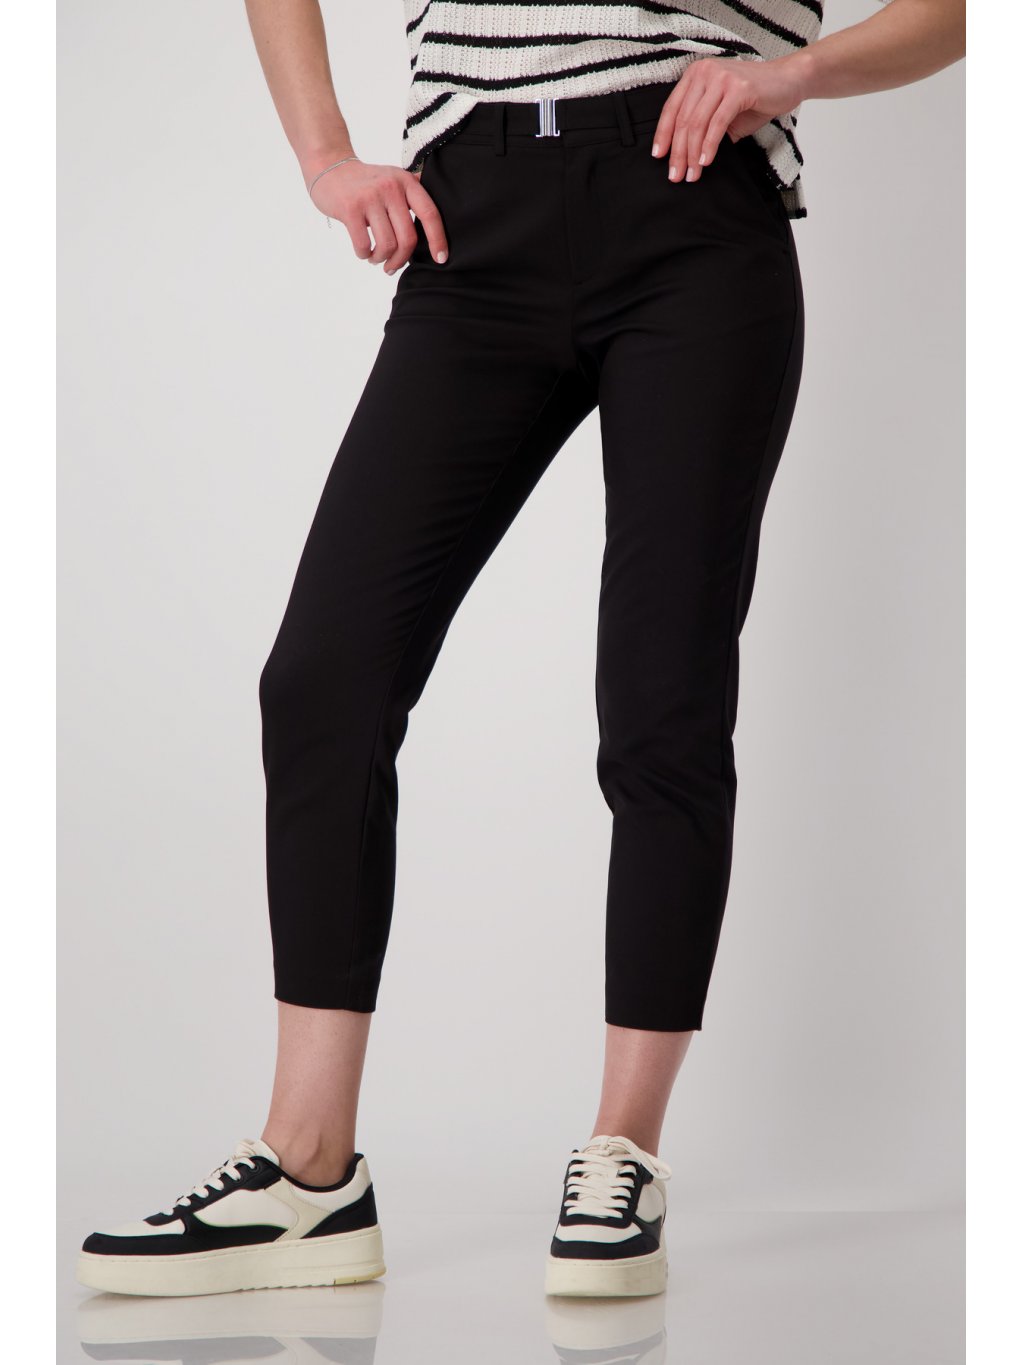 Kalhoty Monari 8590 černé elastické s páskem 